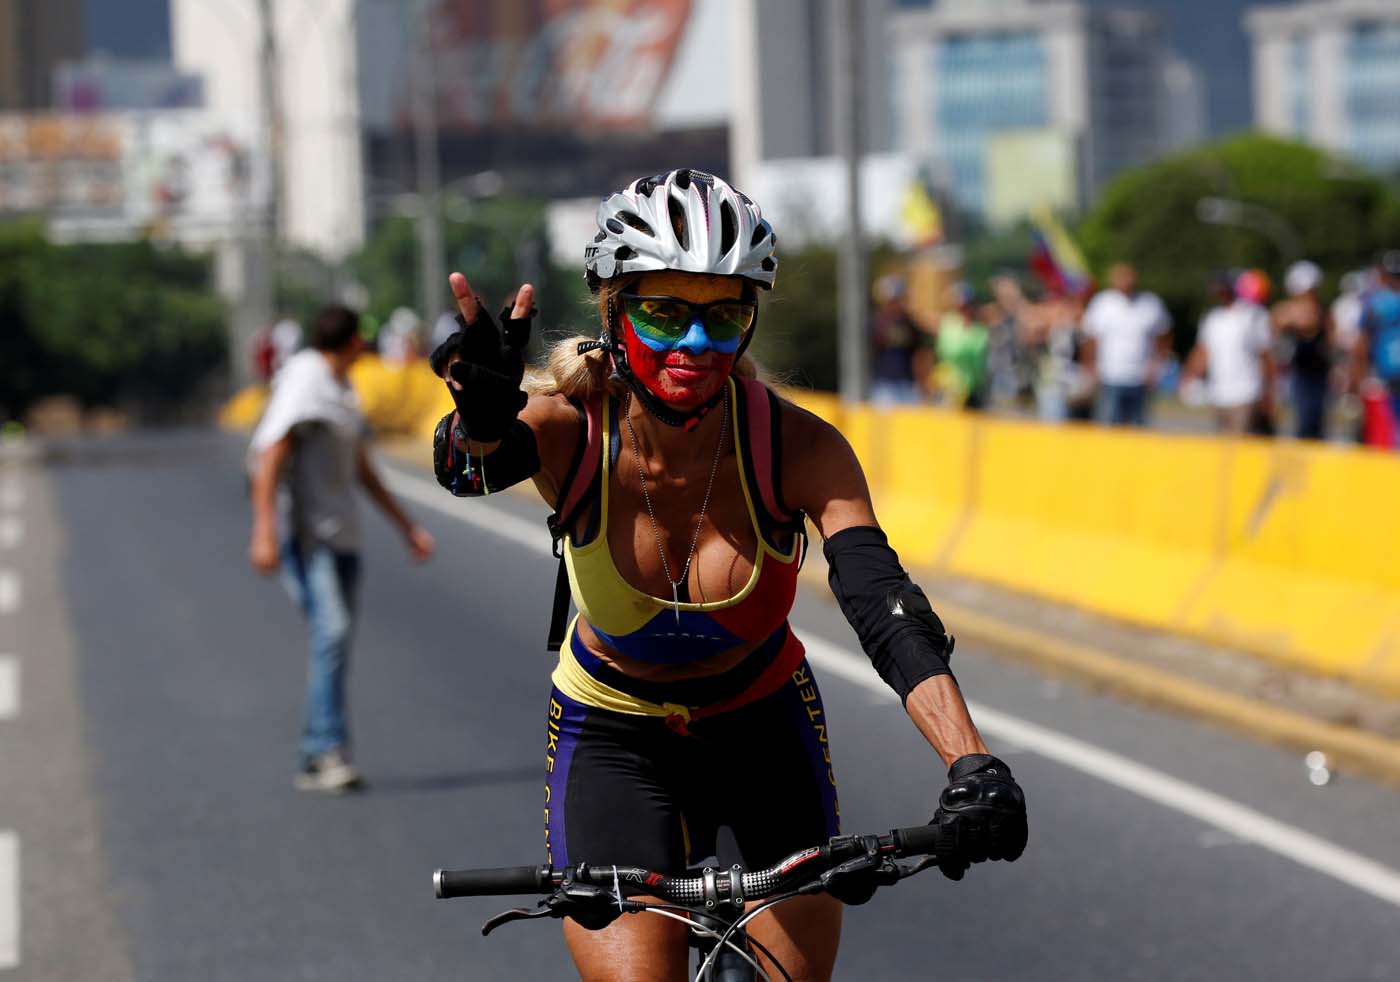 An opposition supporter rallies against President Nicolas Maduro in Caracas, Venezuela, May 20, 2017. REUTERS/Carlos Garcia Rawlins